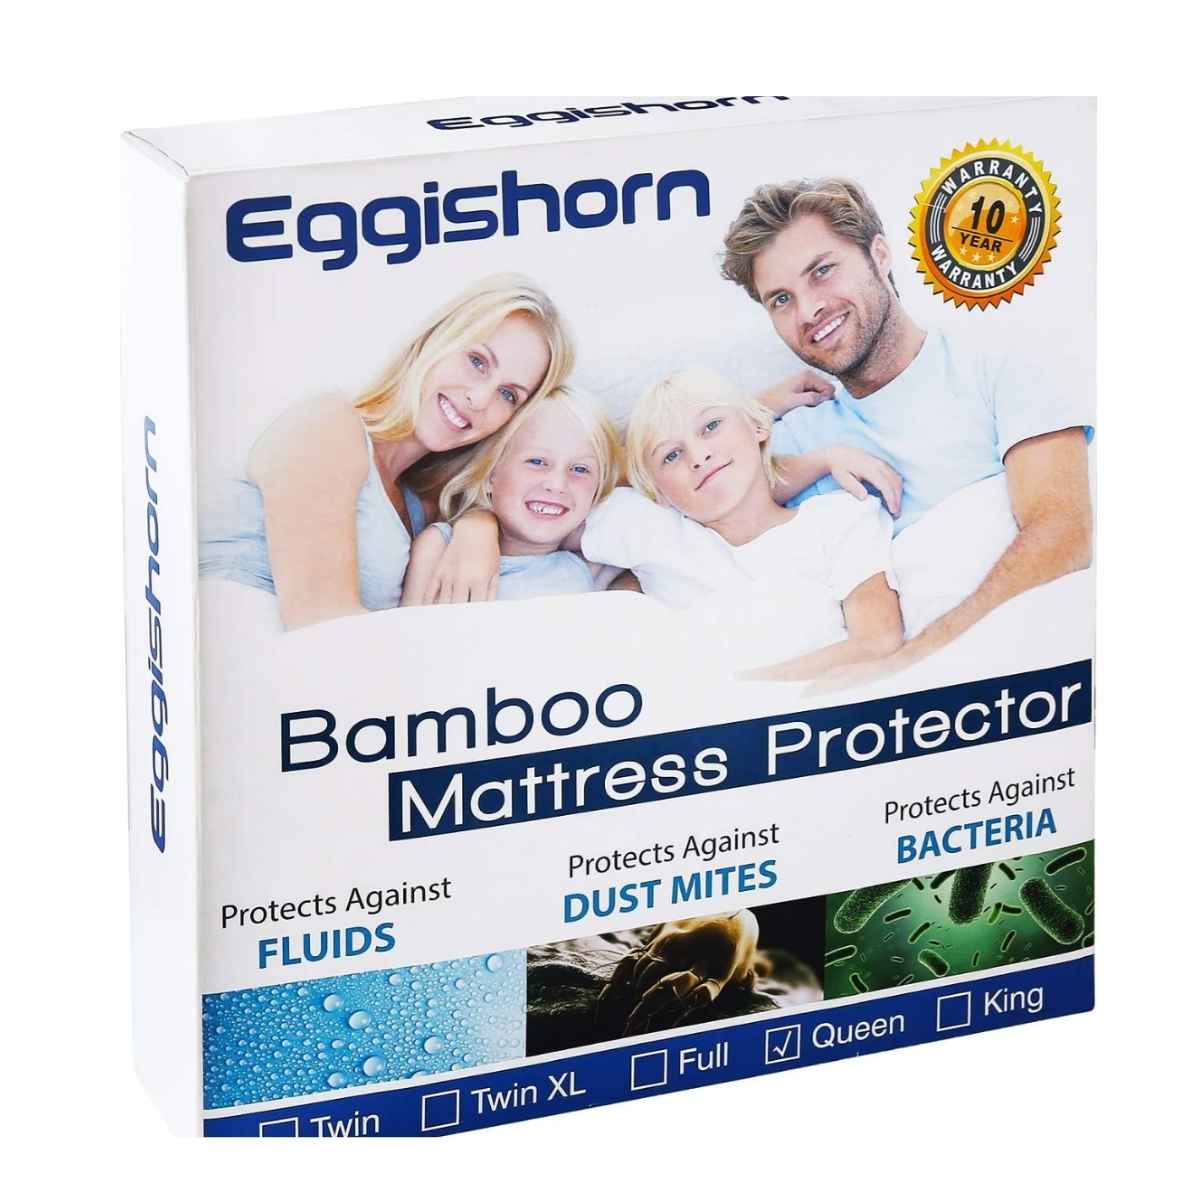 Eggishorn bamboo mattress protector